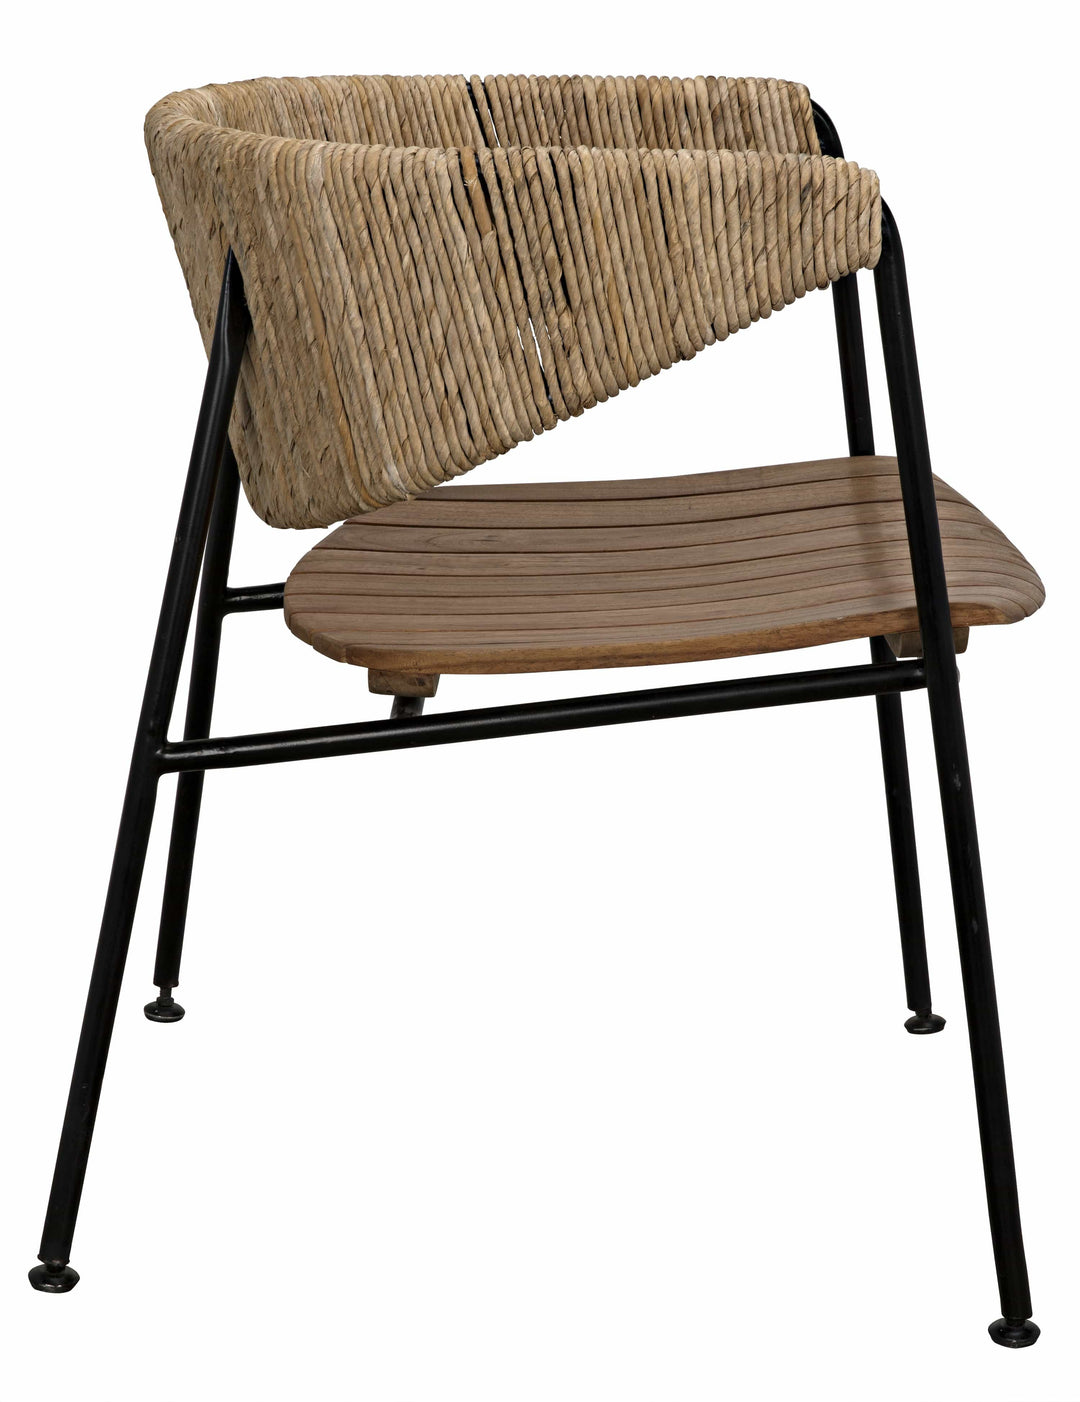 Hayu Chair - Clear Coat Semi-Gloss